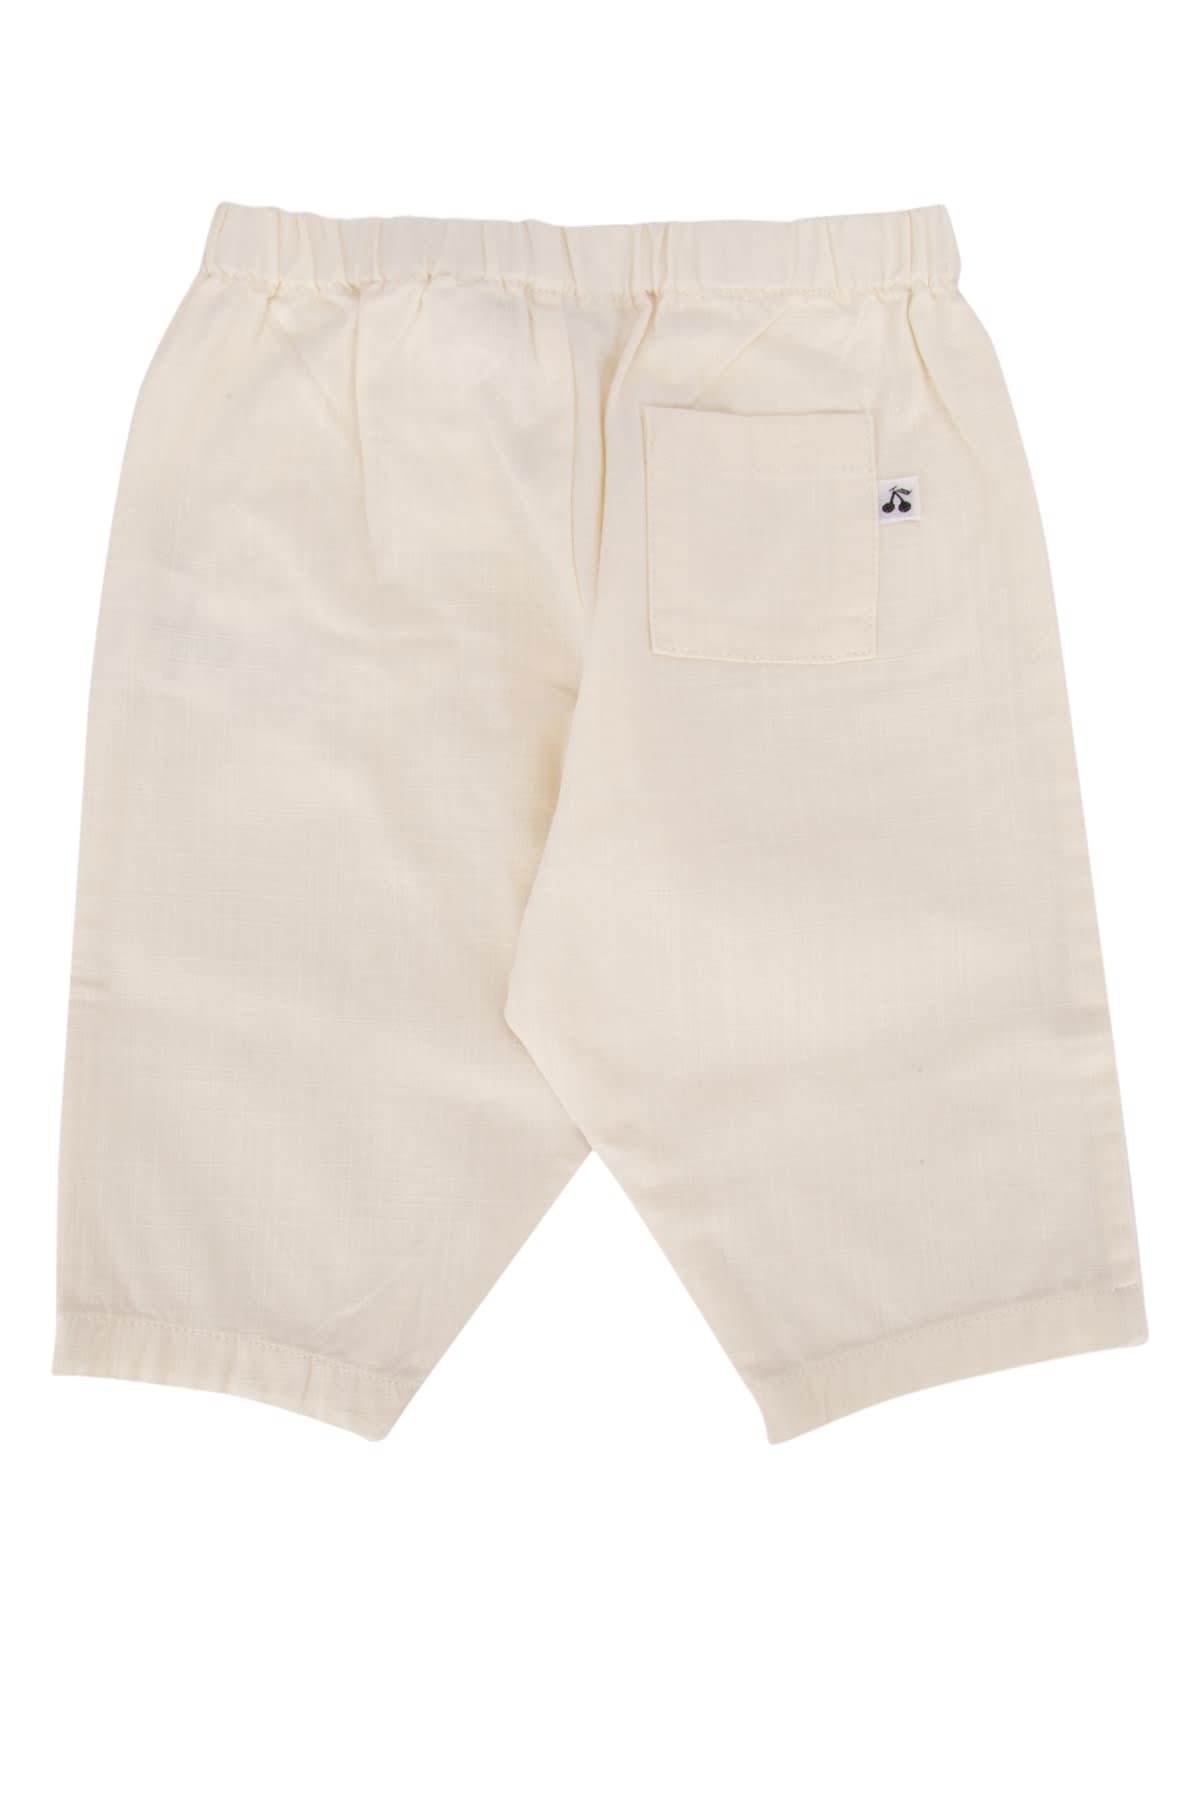 Bonpoint Babies' Pantalone In Blanclait